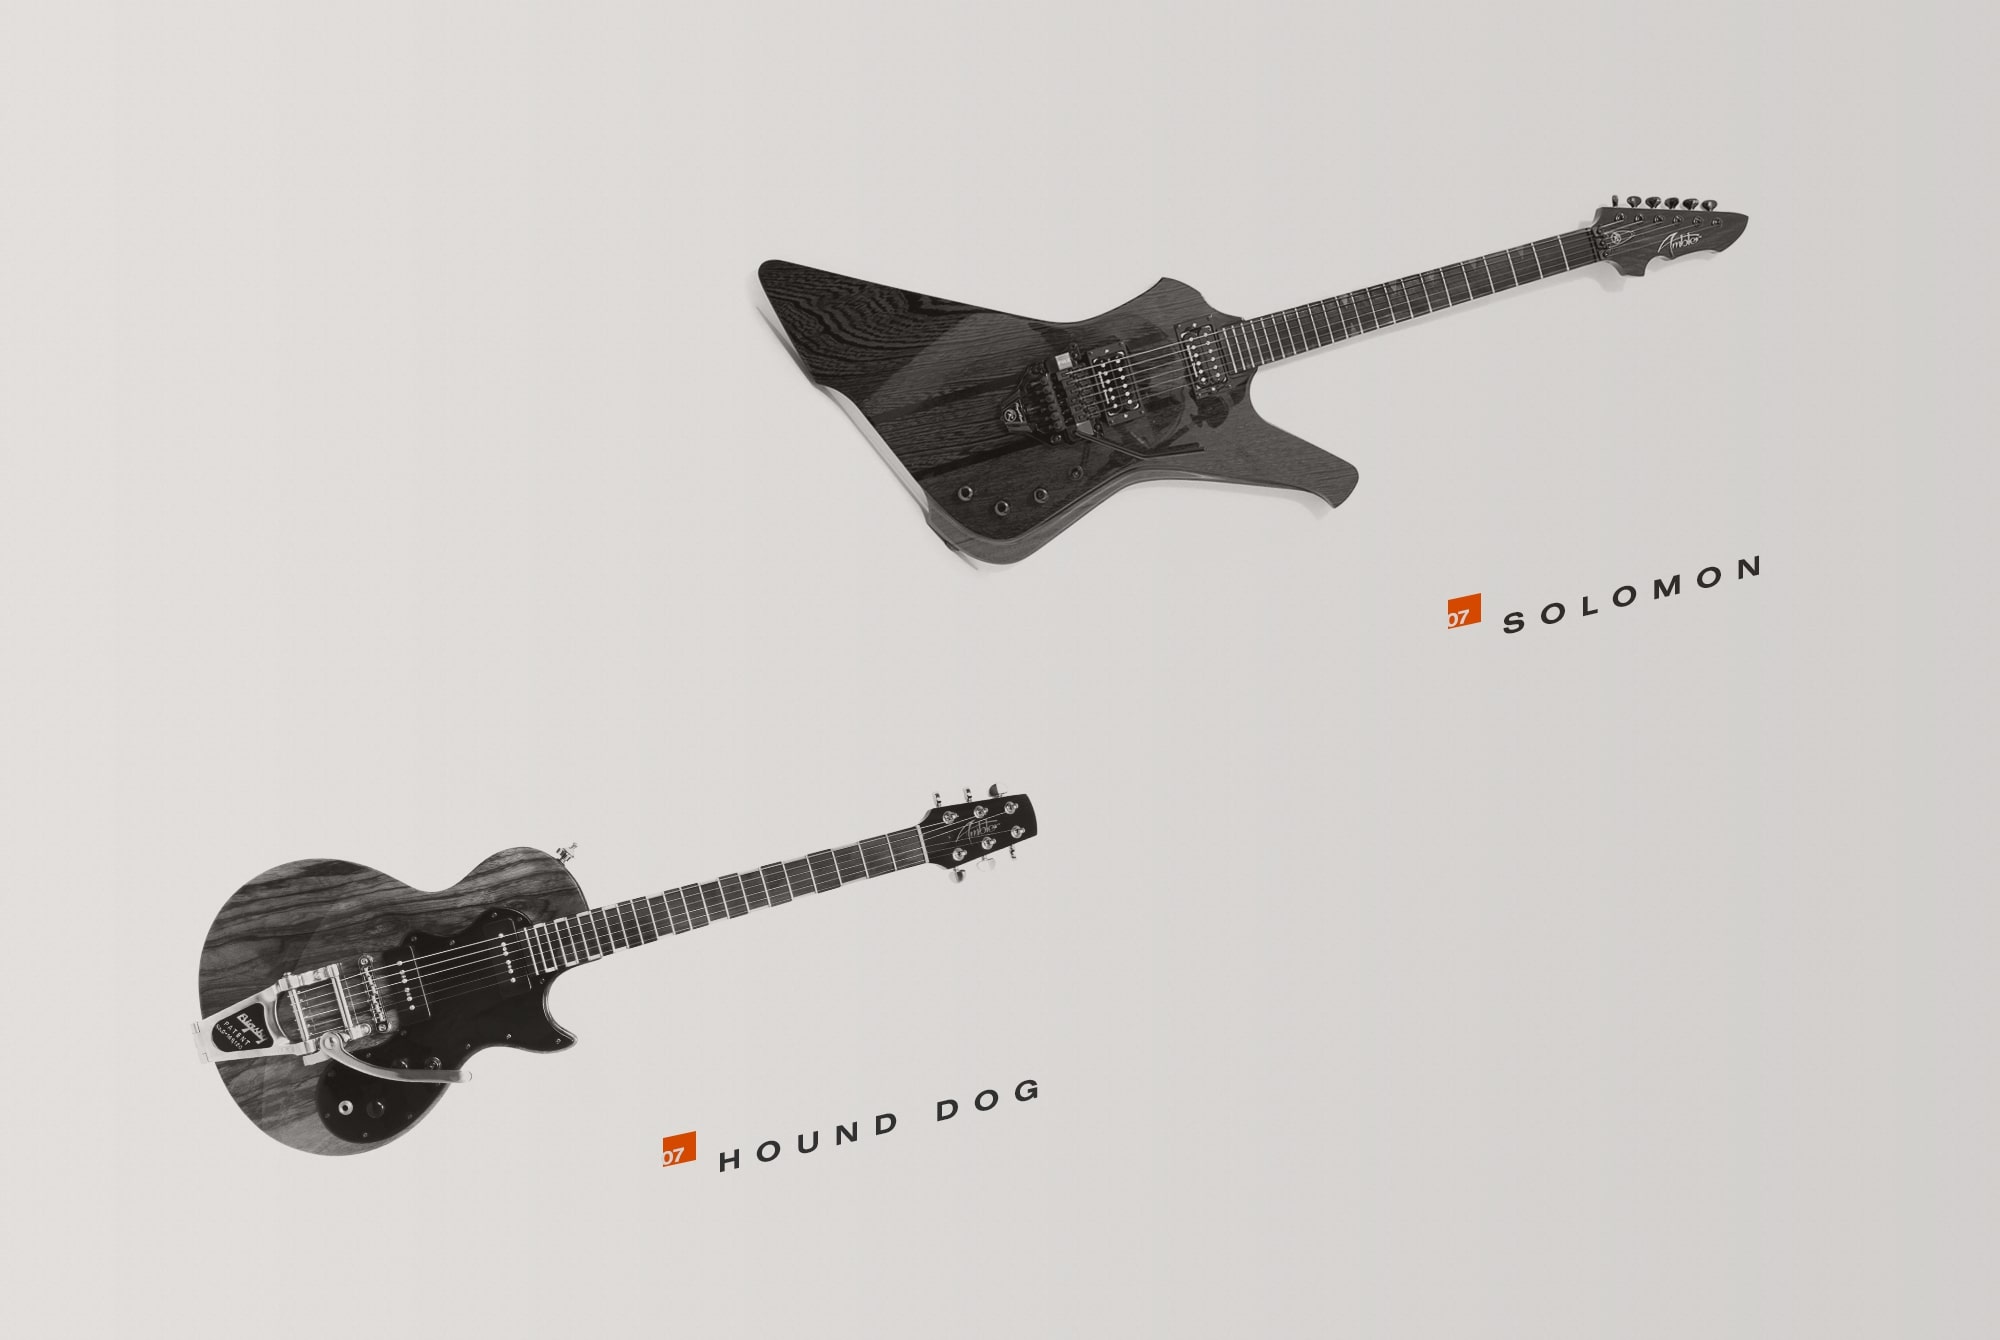 Ten Fathoms - Ambler Guitars - Brand Visual Identity